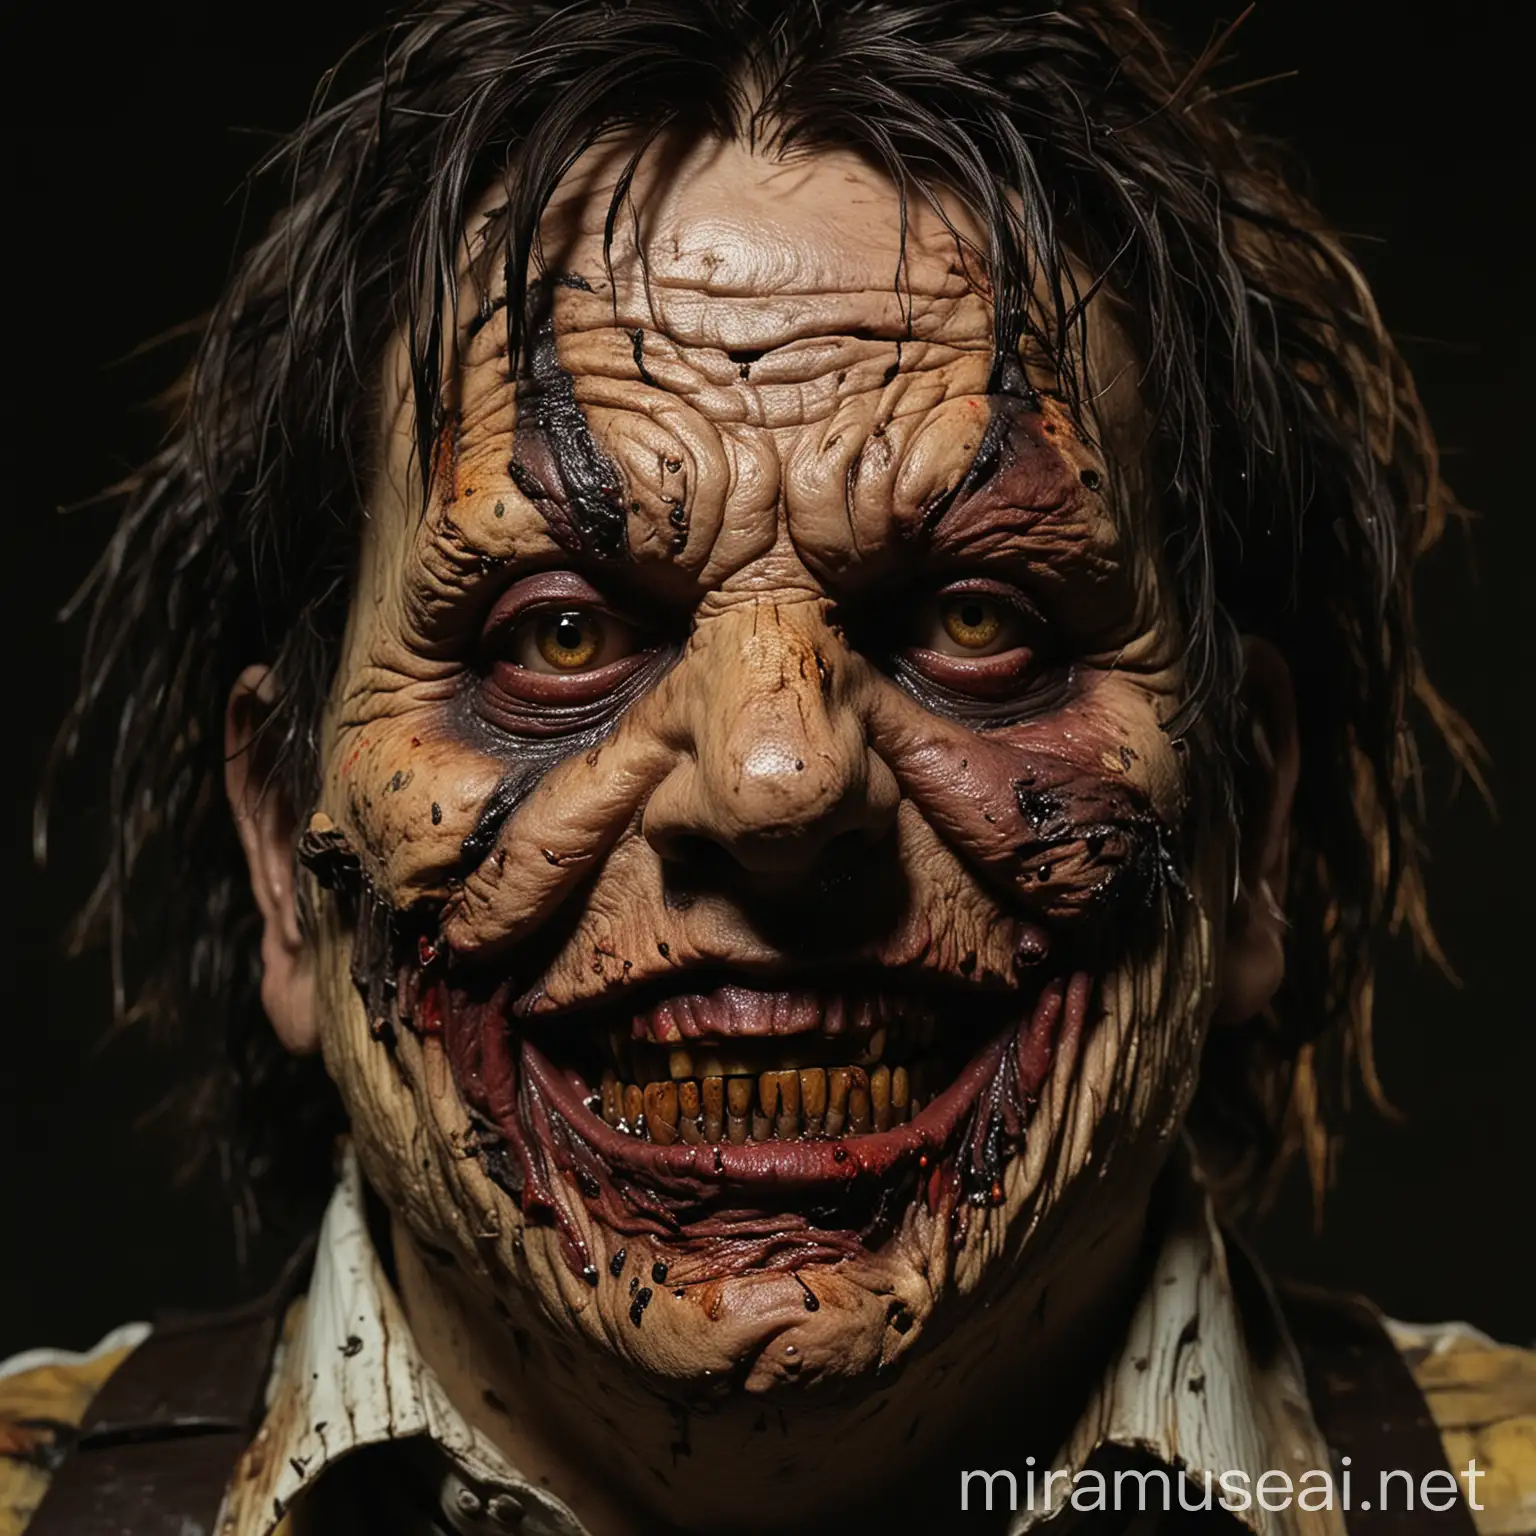 Leatherface psychodelic gore deep dark horror deformed face
